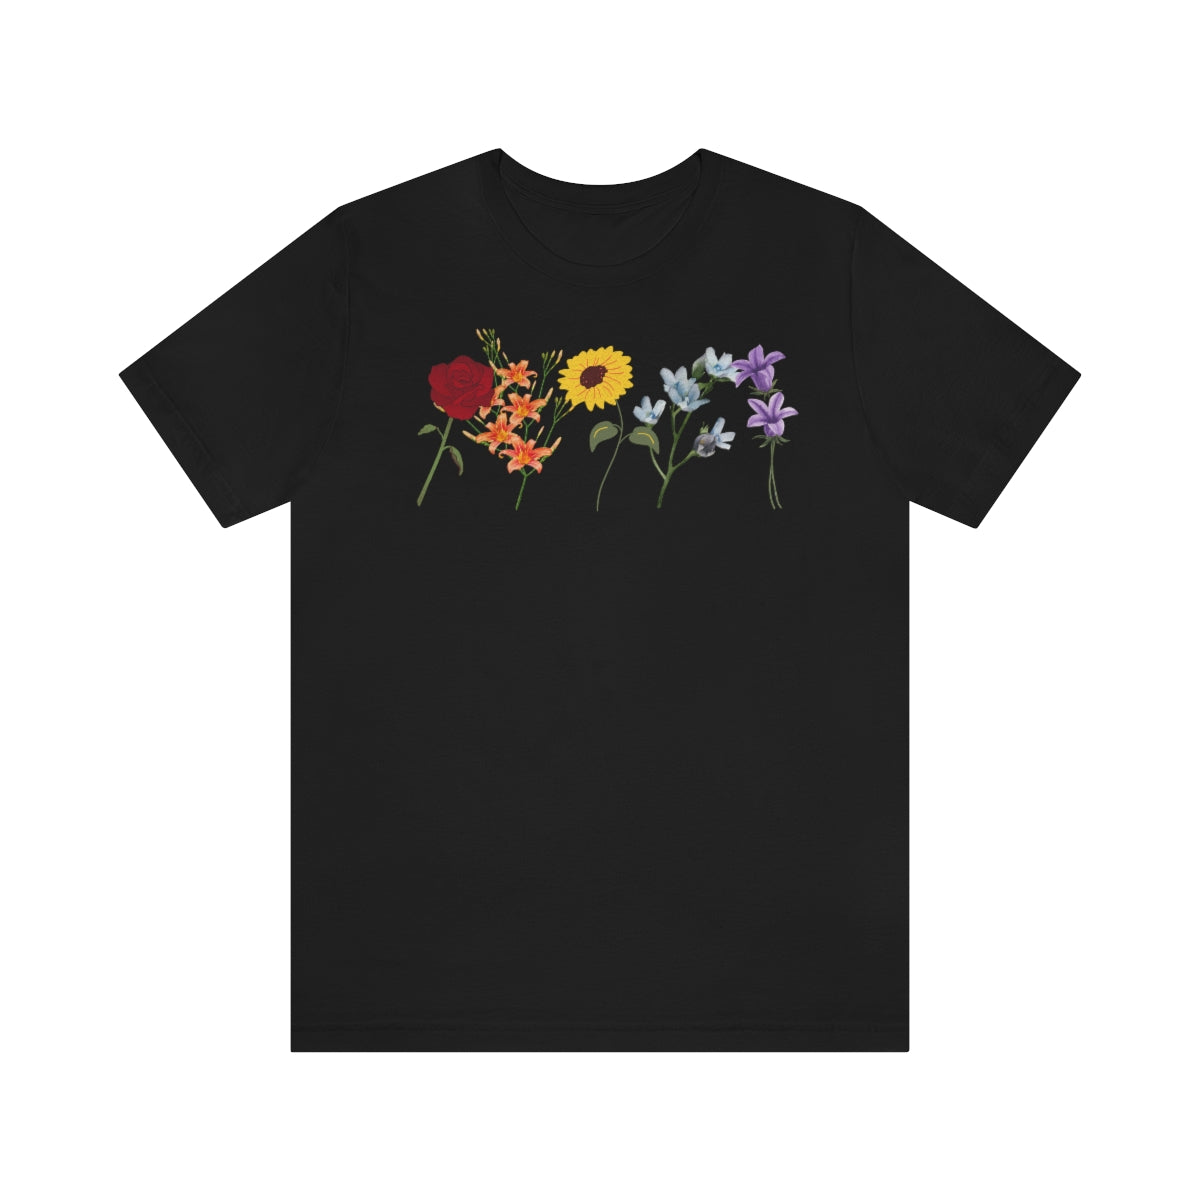 FLOWER POWER RAINBOW PRIDE - t-shirt